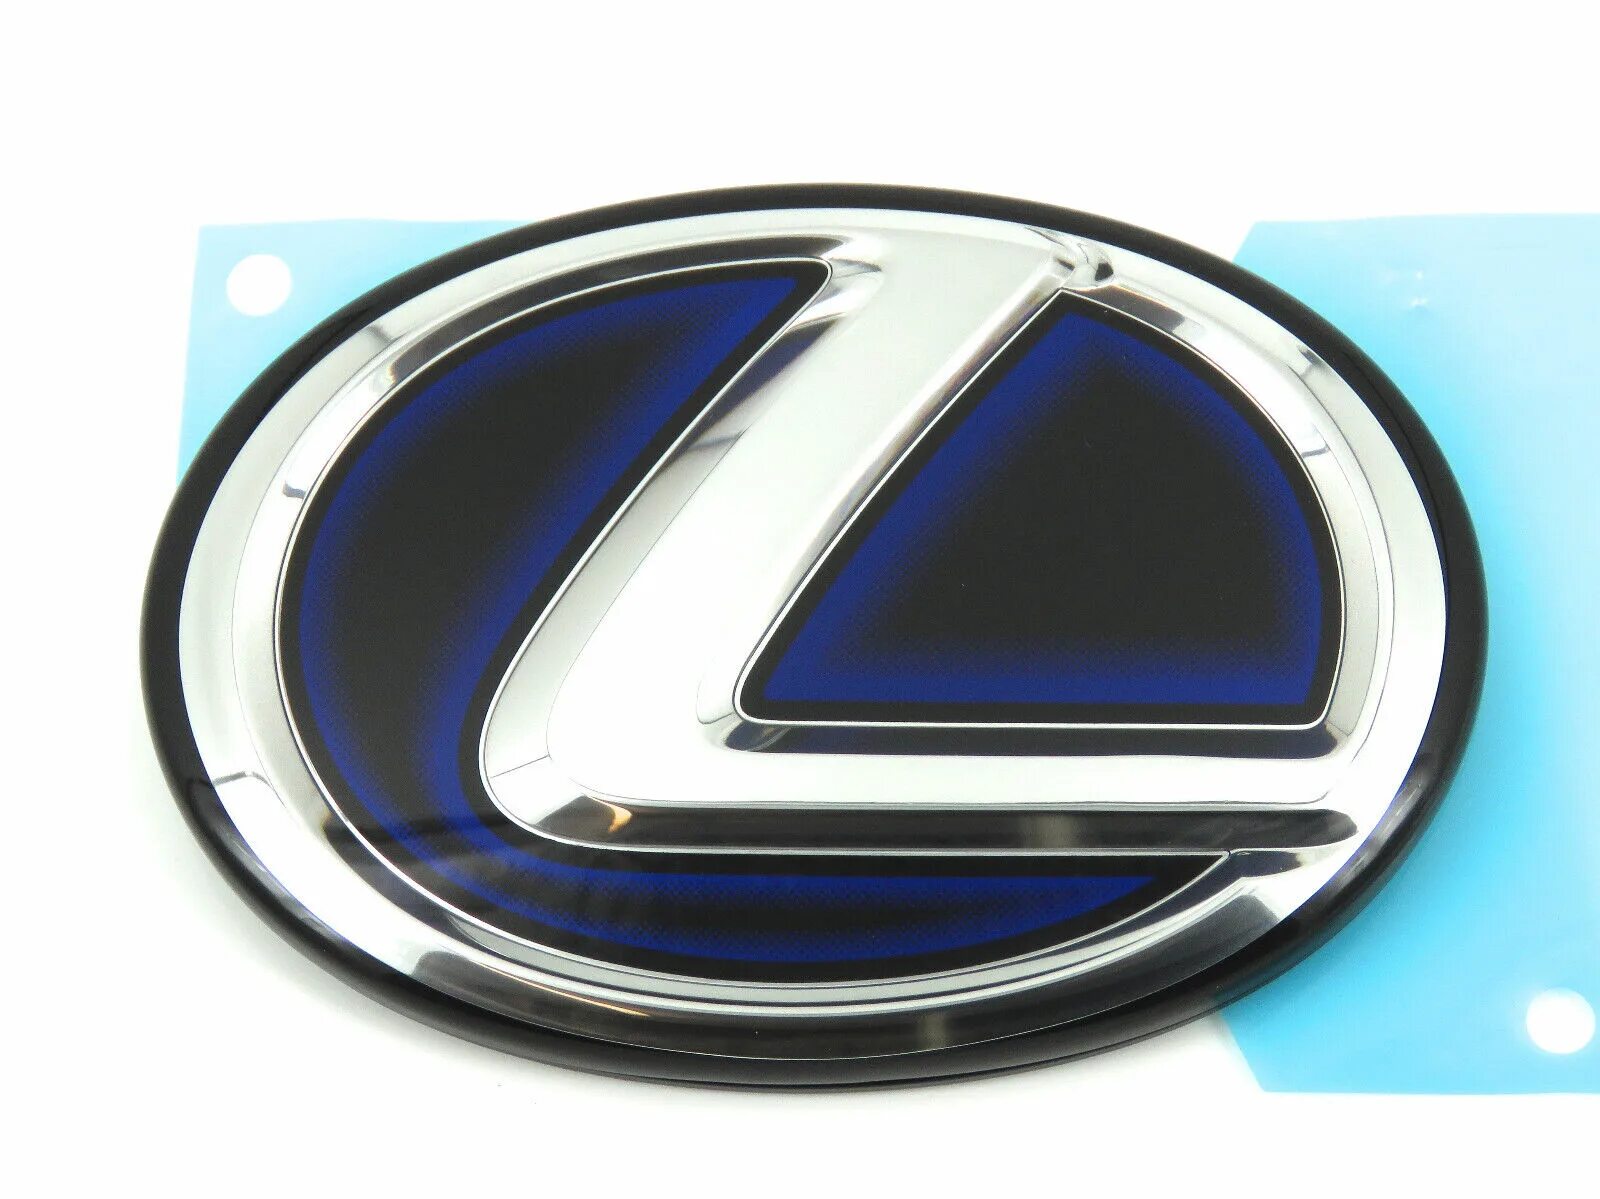 Значок гибрид. Значок Лексус гибрид. NX 200t Lexus значки. Логотип гибрид Lexus. Значок Лексус маленький.